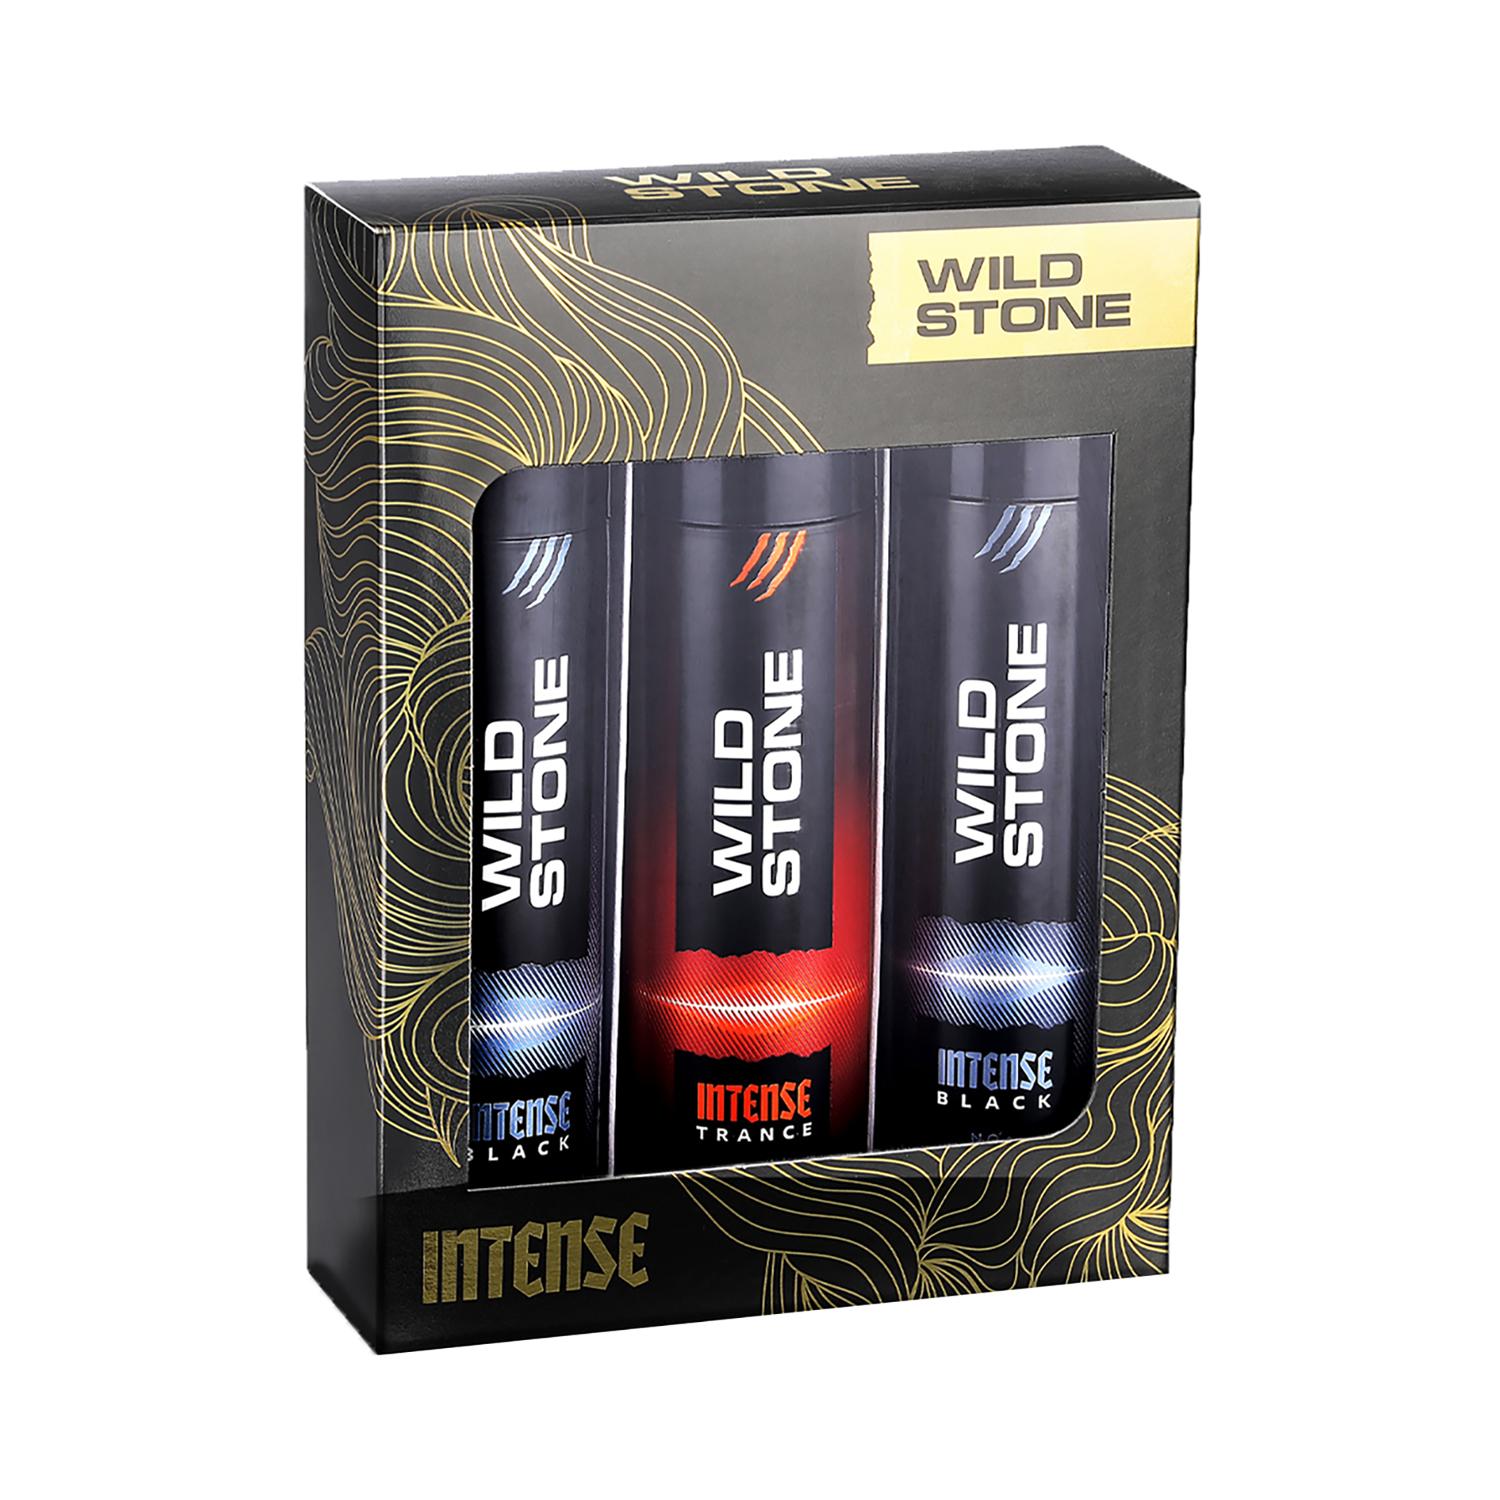 Wild Stone | Wild Stone Intense Black and Trance No Gas Deodorant Gift Set for Men (3 pcs)